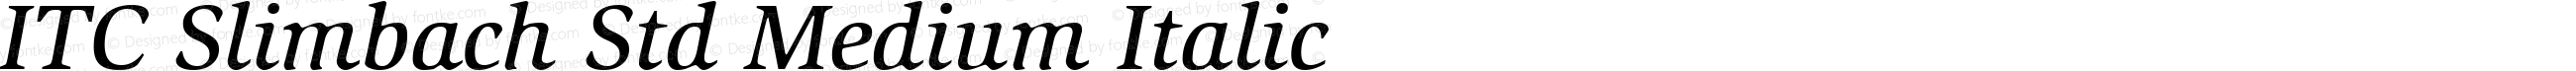 ITC Slimbach Std Medium Italic